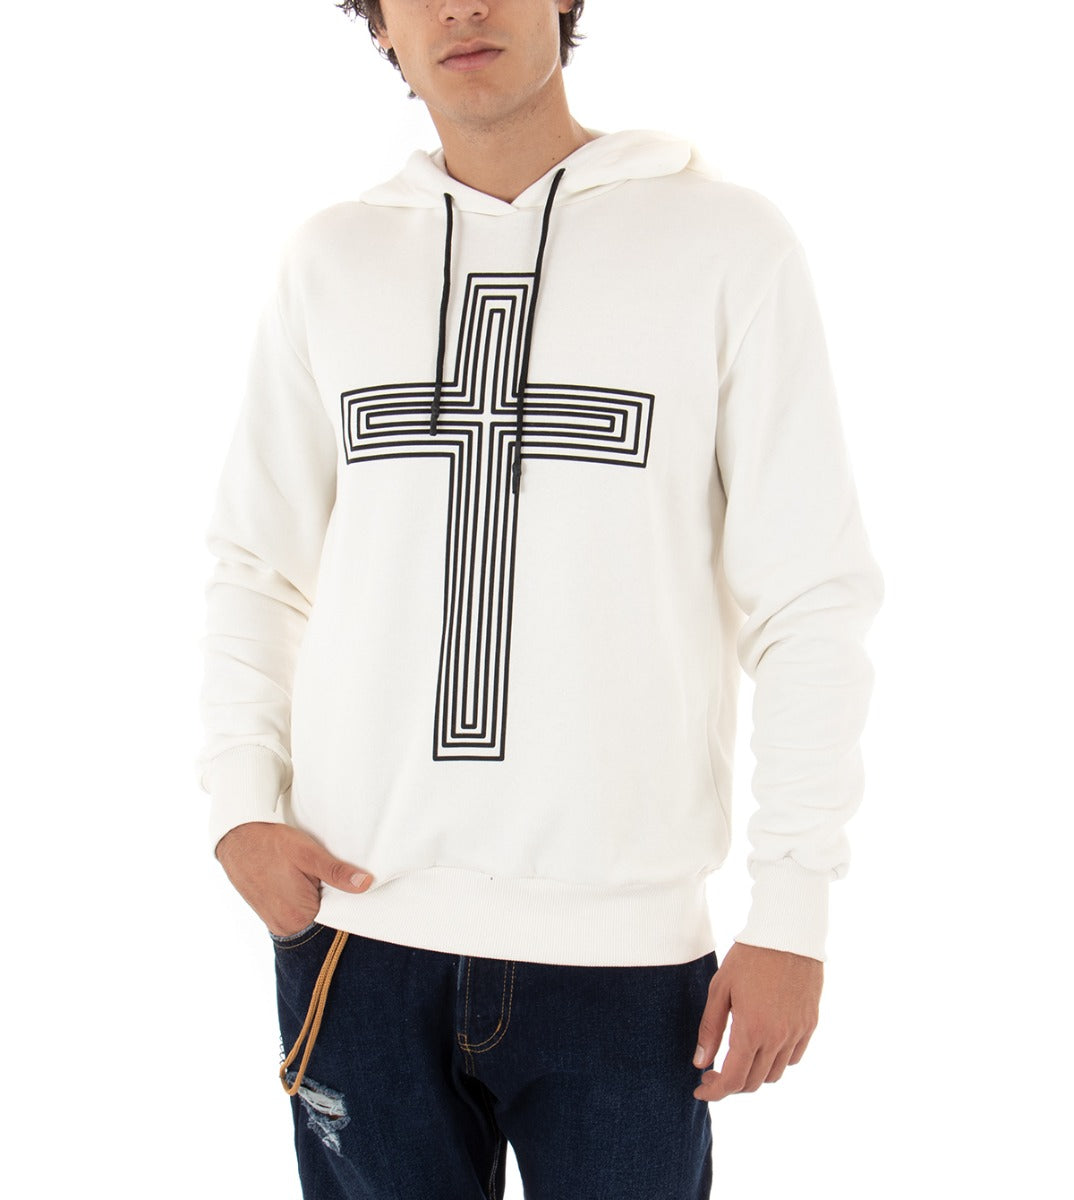 Men's Sweatshirt With White Hood Shirt With Cross Print Regular Fit GIOSAL-F2719A